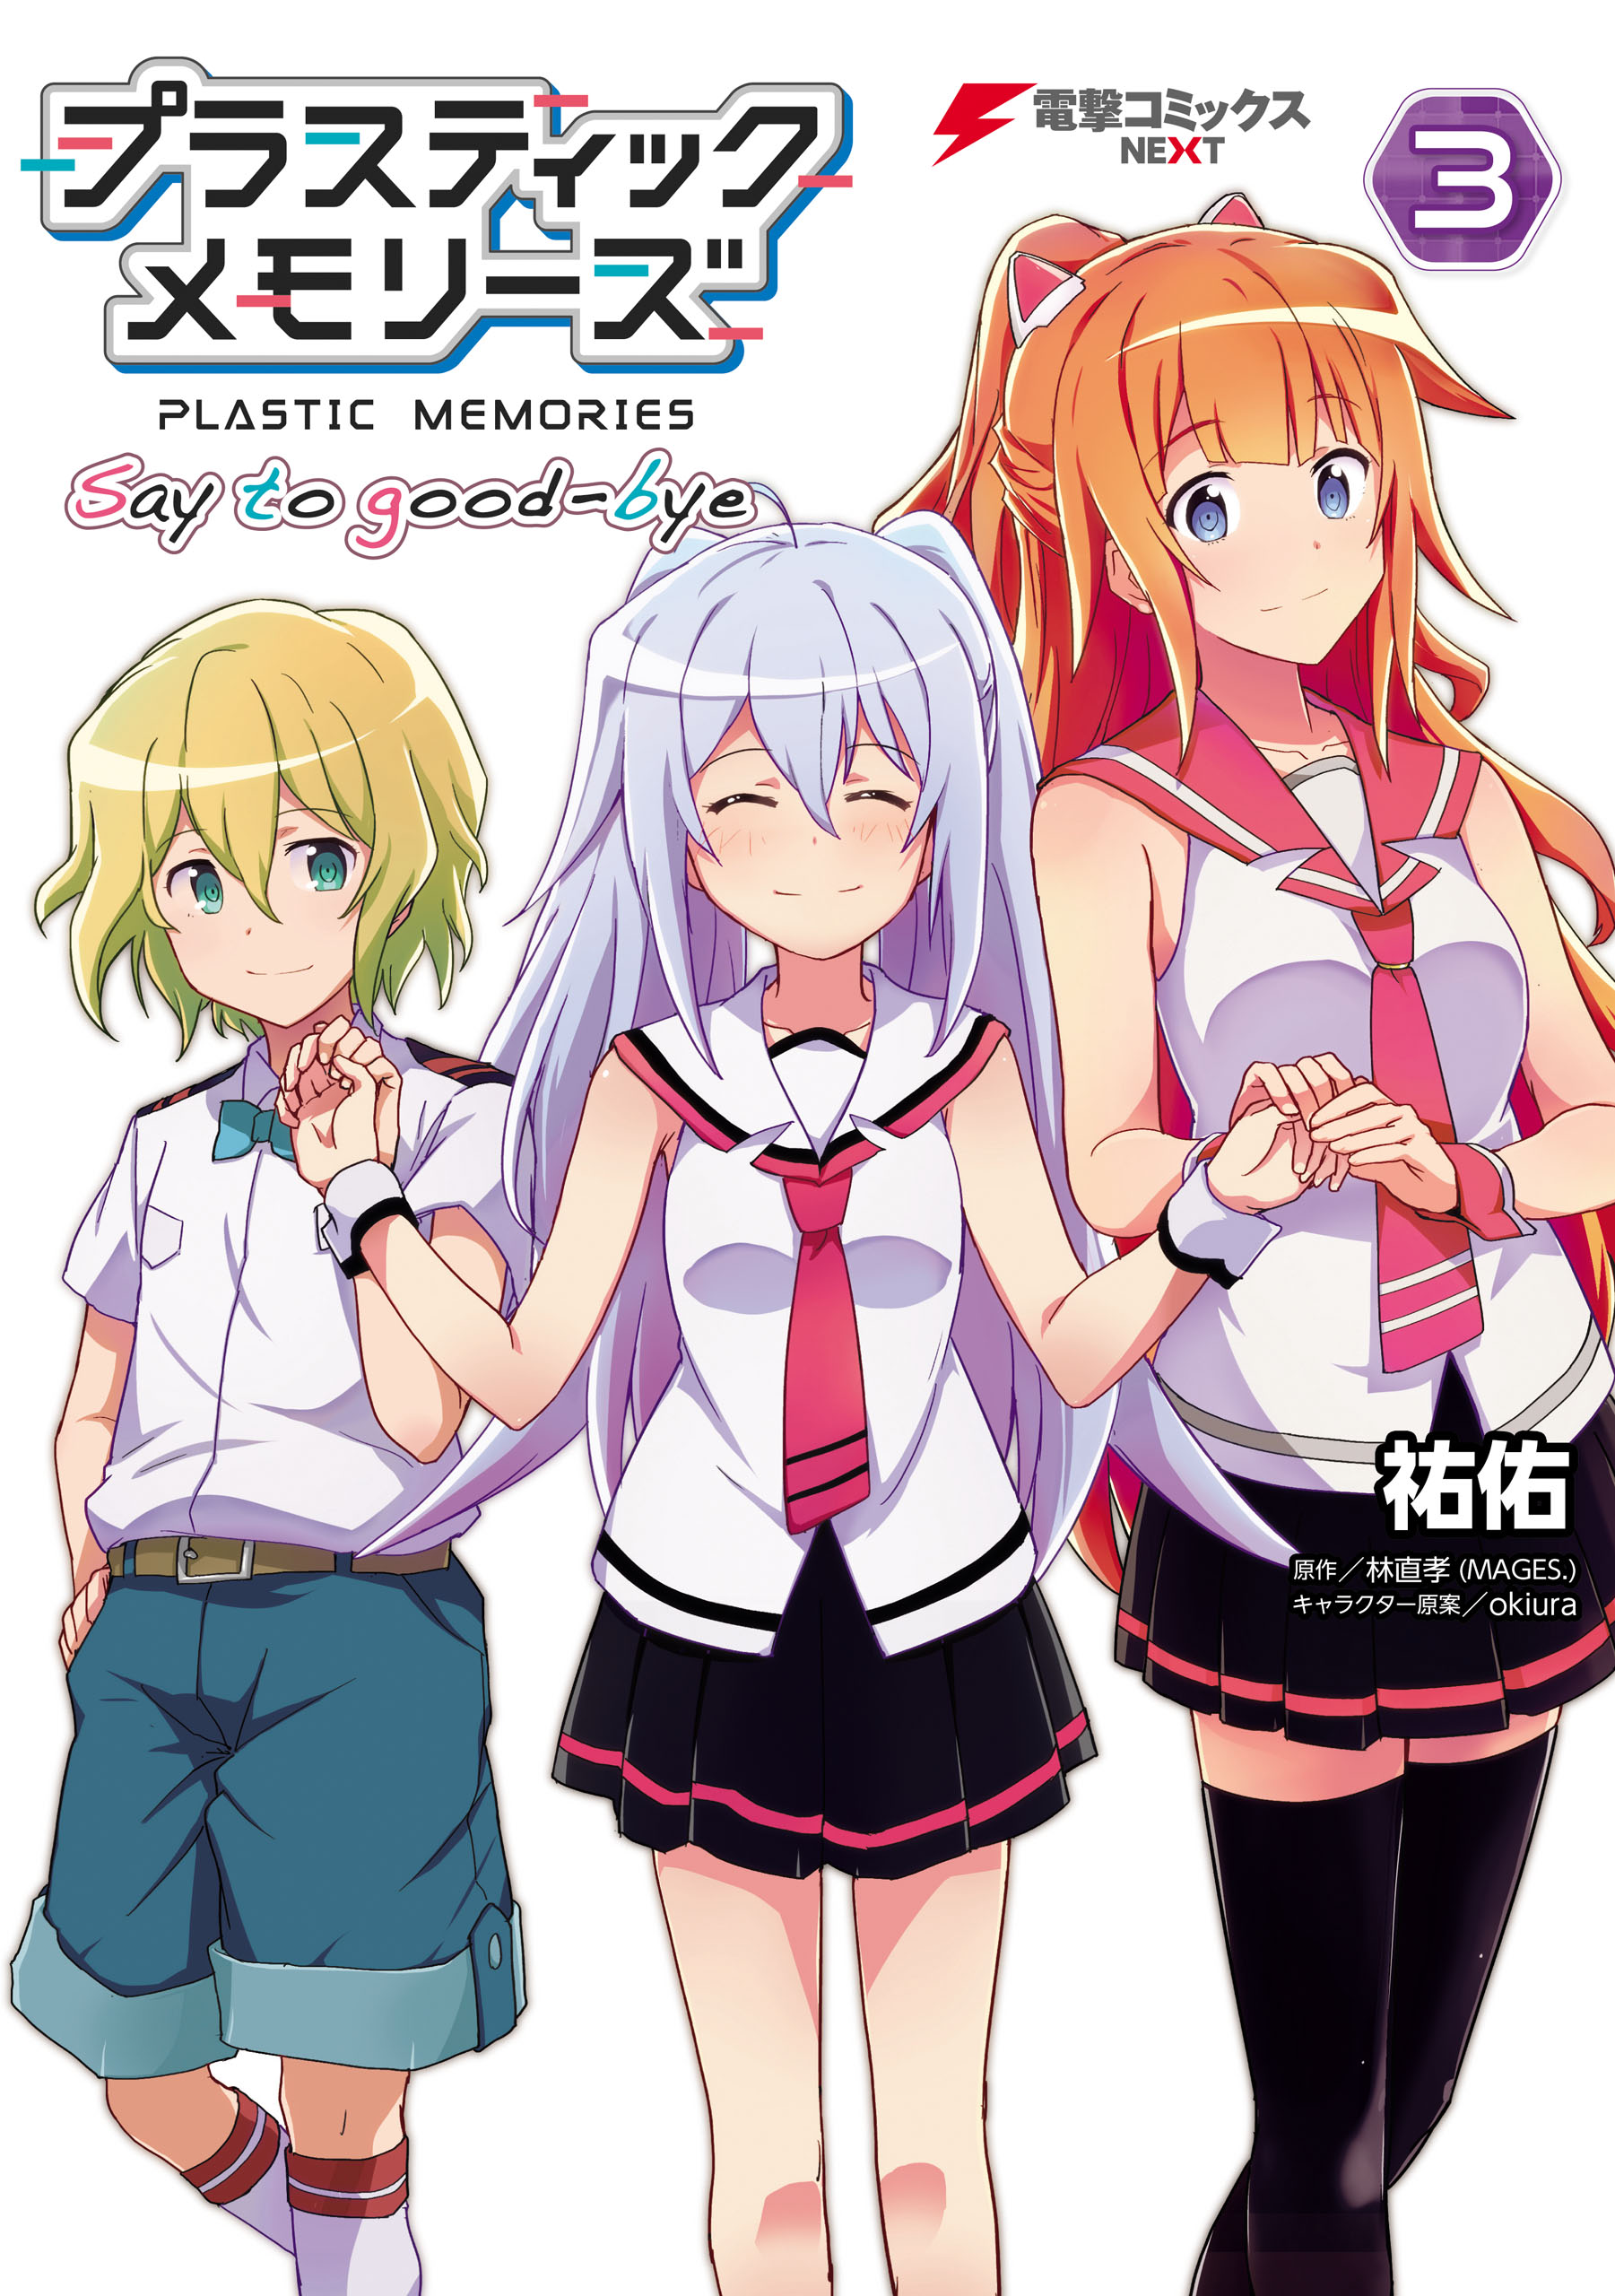 Read Plastic Memories - Say To Good-Bye Vol.3 Chapter 16: Memories: 16 on  Mangakakalot